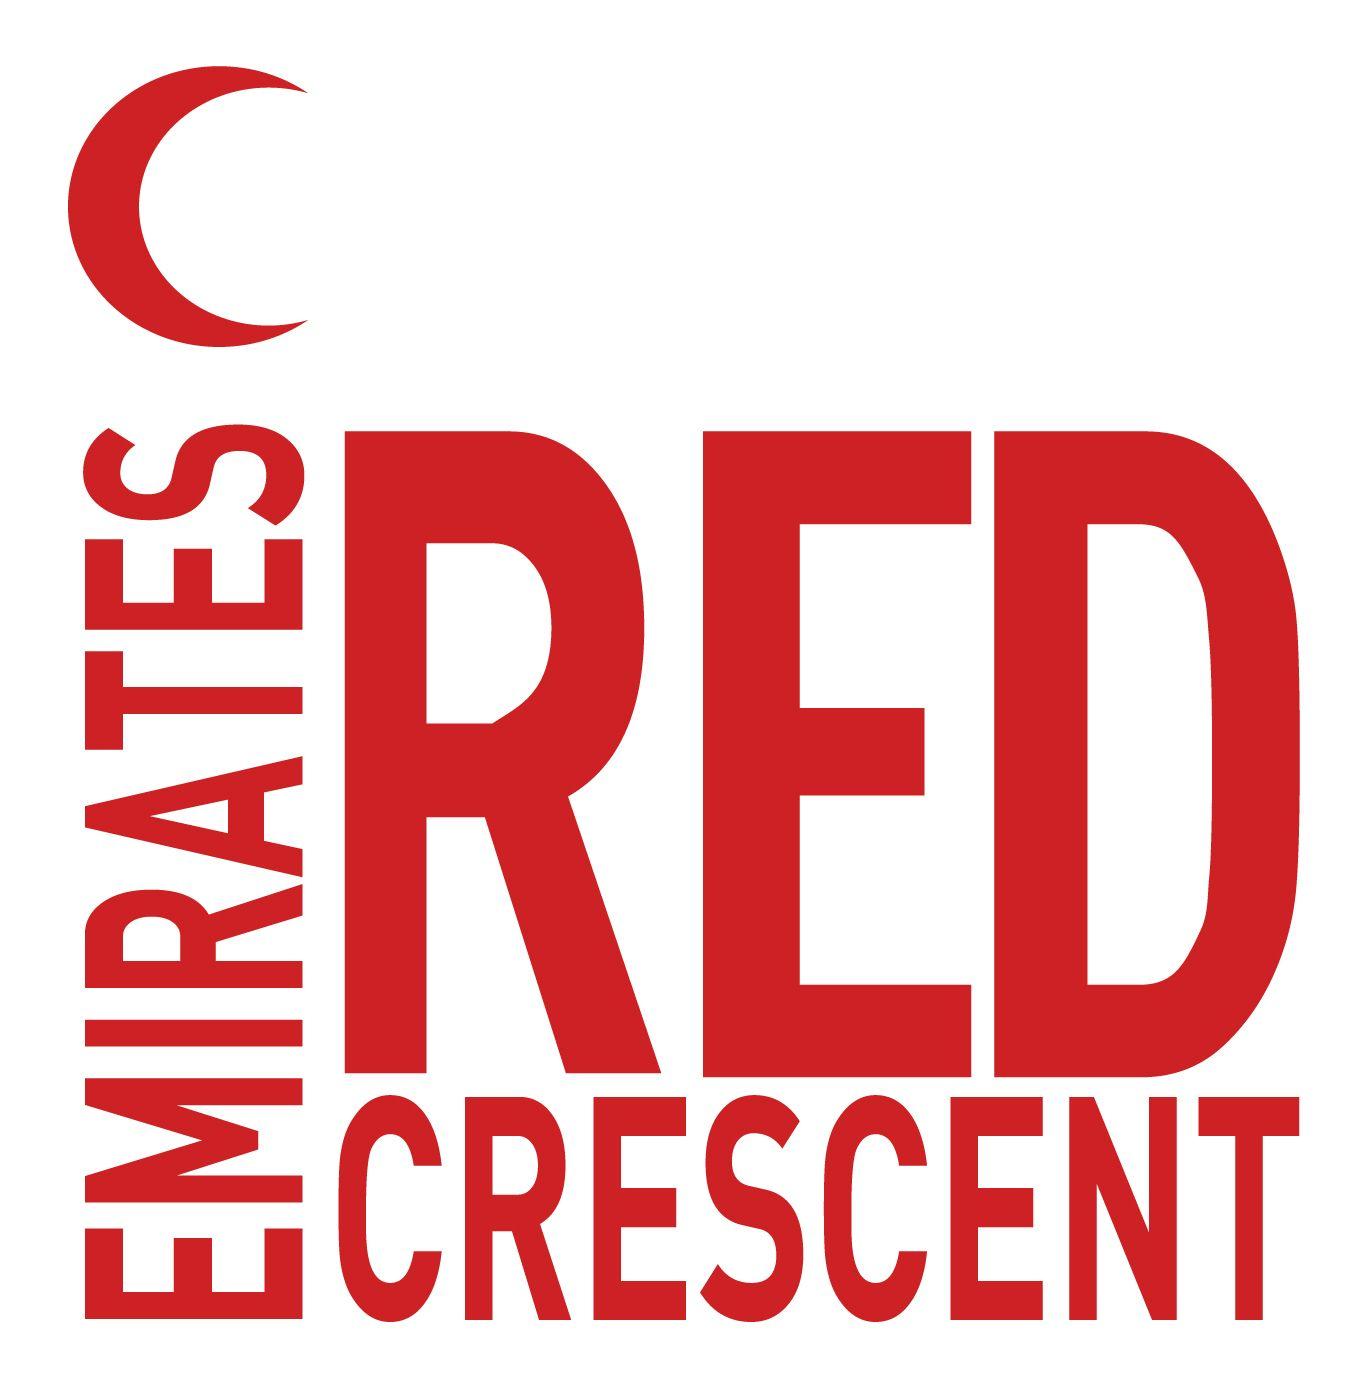 Red Crescent Logo - Emirates red crescent Logos